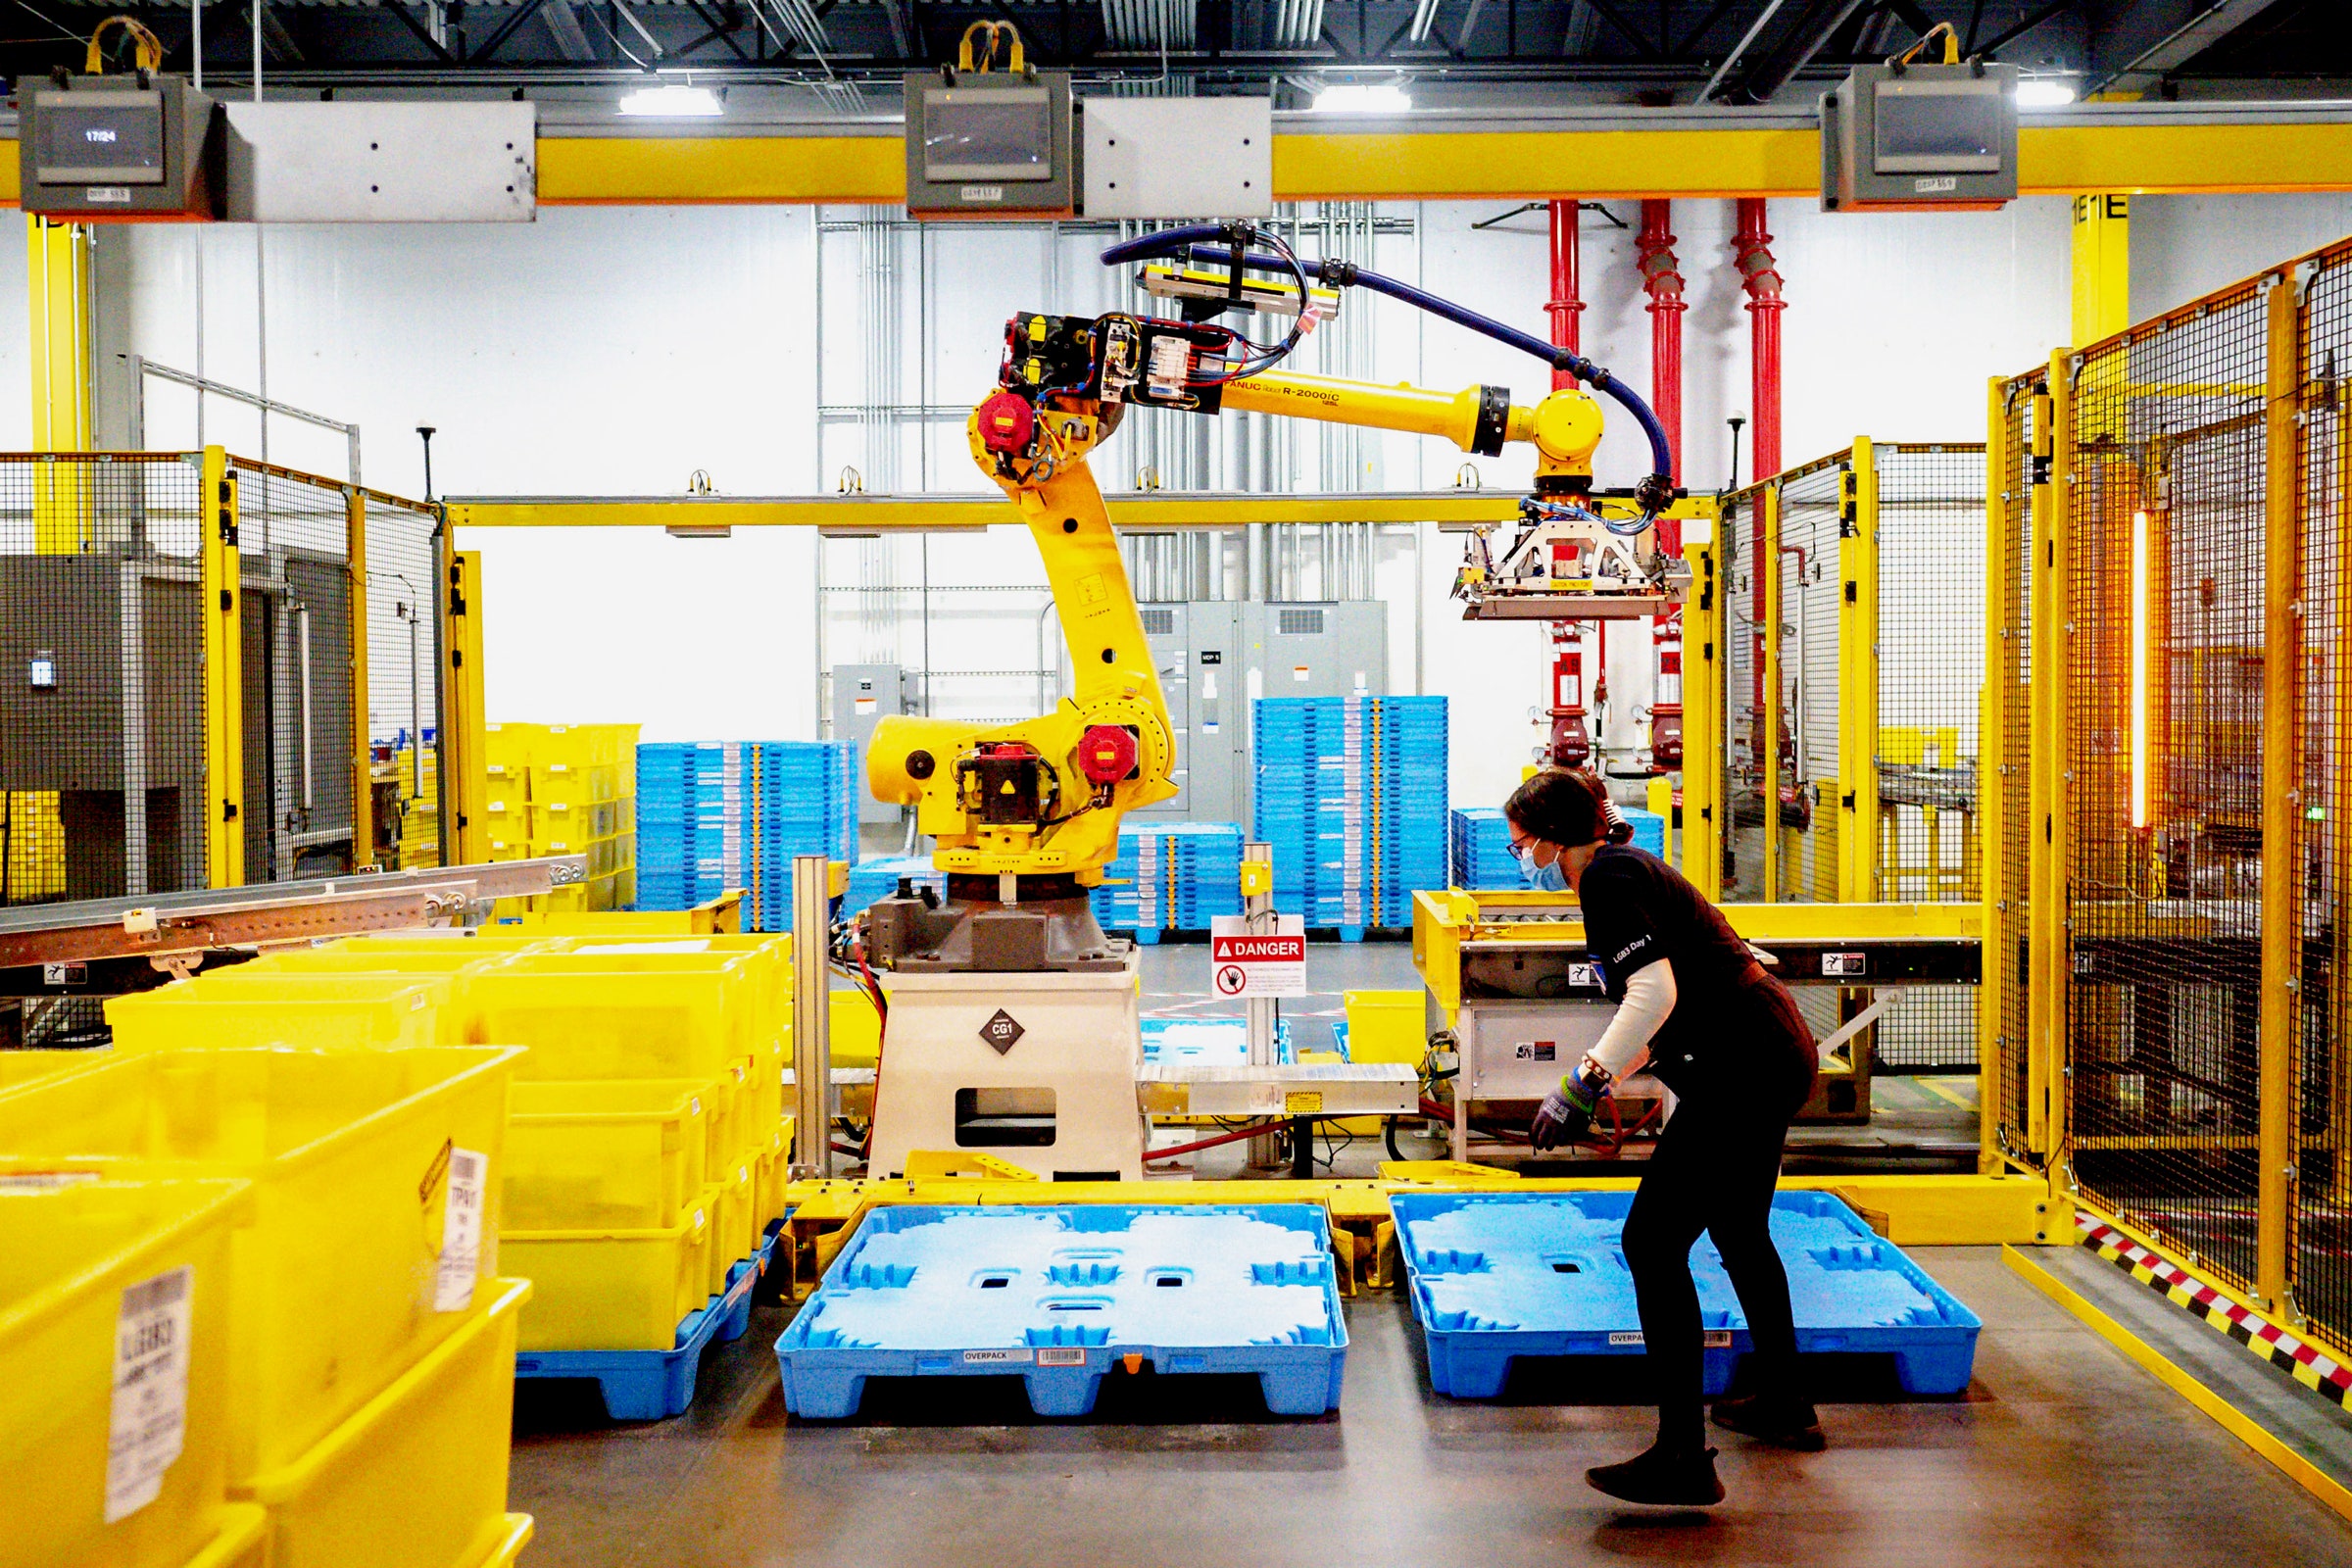 Amazon Using Robots in Warehouses